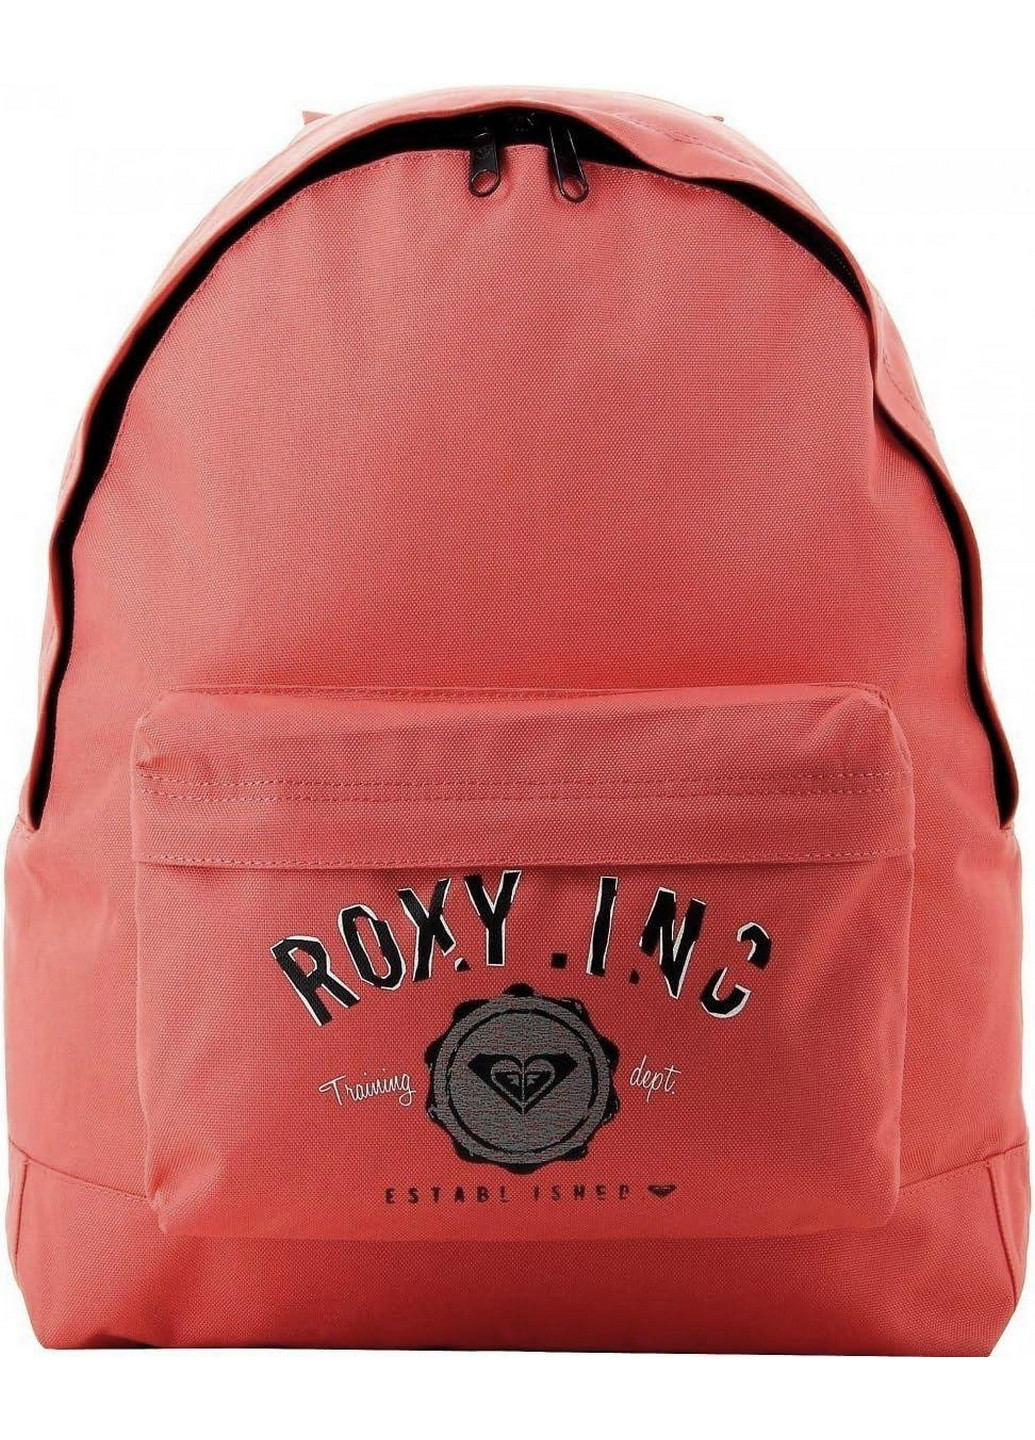 Рюкзак молодежный Basic Blush Heart Backpack Roxy (276978958)